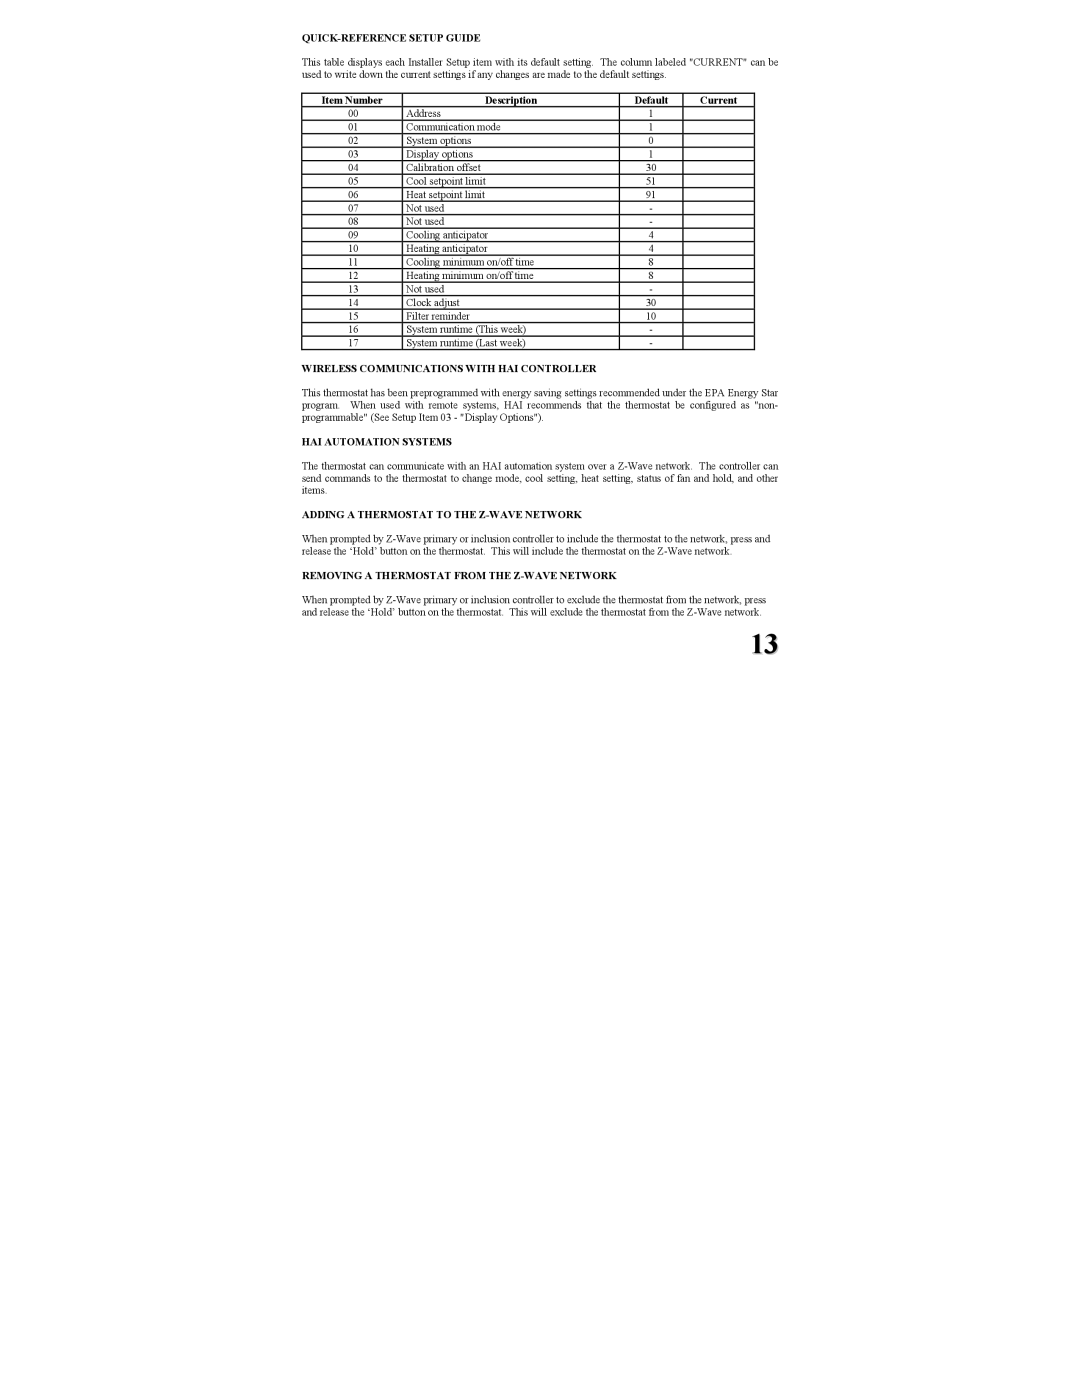 Home Automation RC-80BZ Quick-Referencesetup Guide, Item Number, Description, Default, Current, Hai Automation Systems 